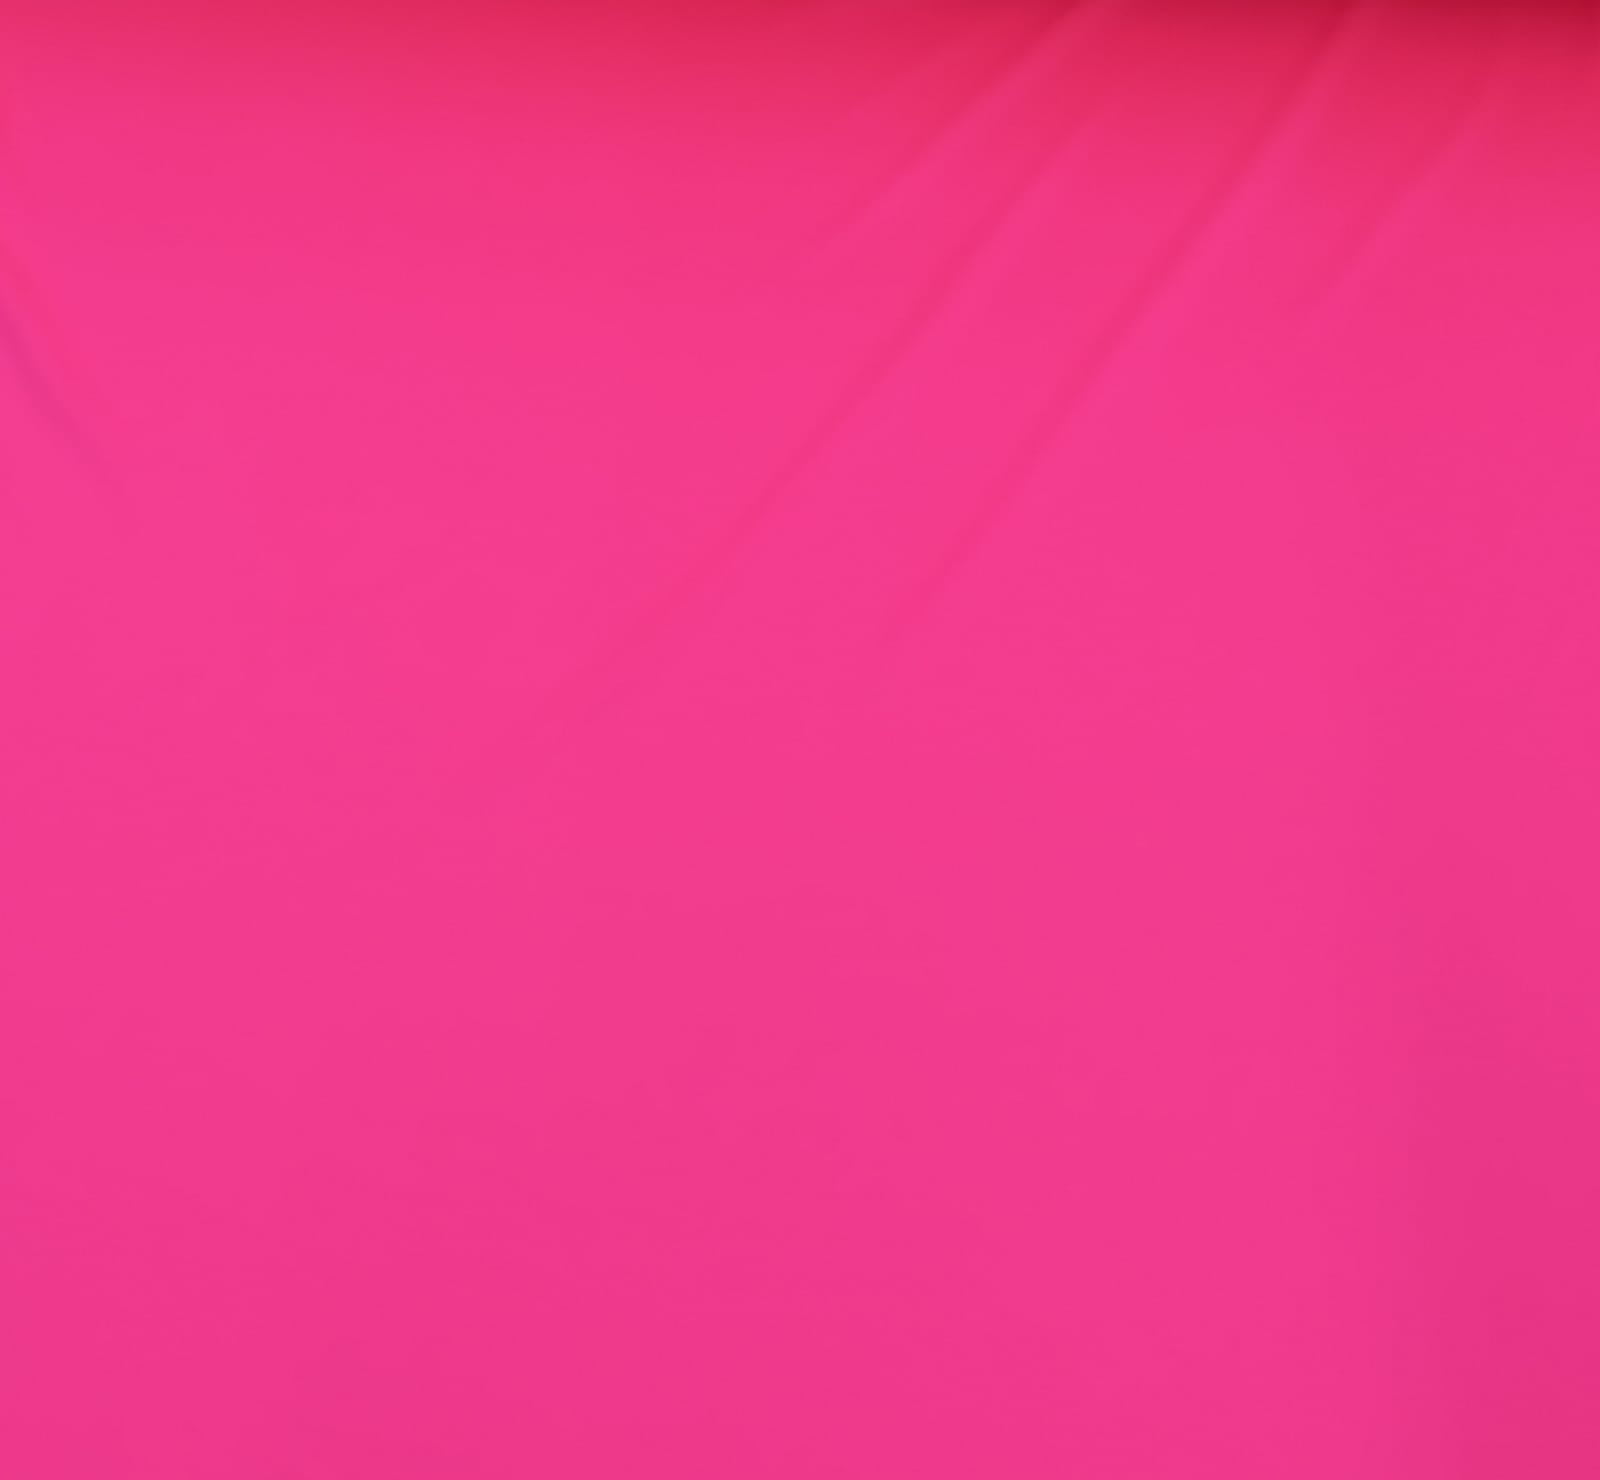 Tecido Malha Helanca Light Rosa Neon